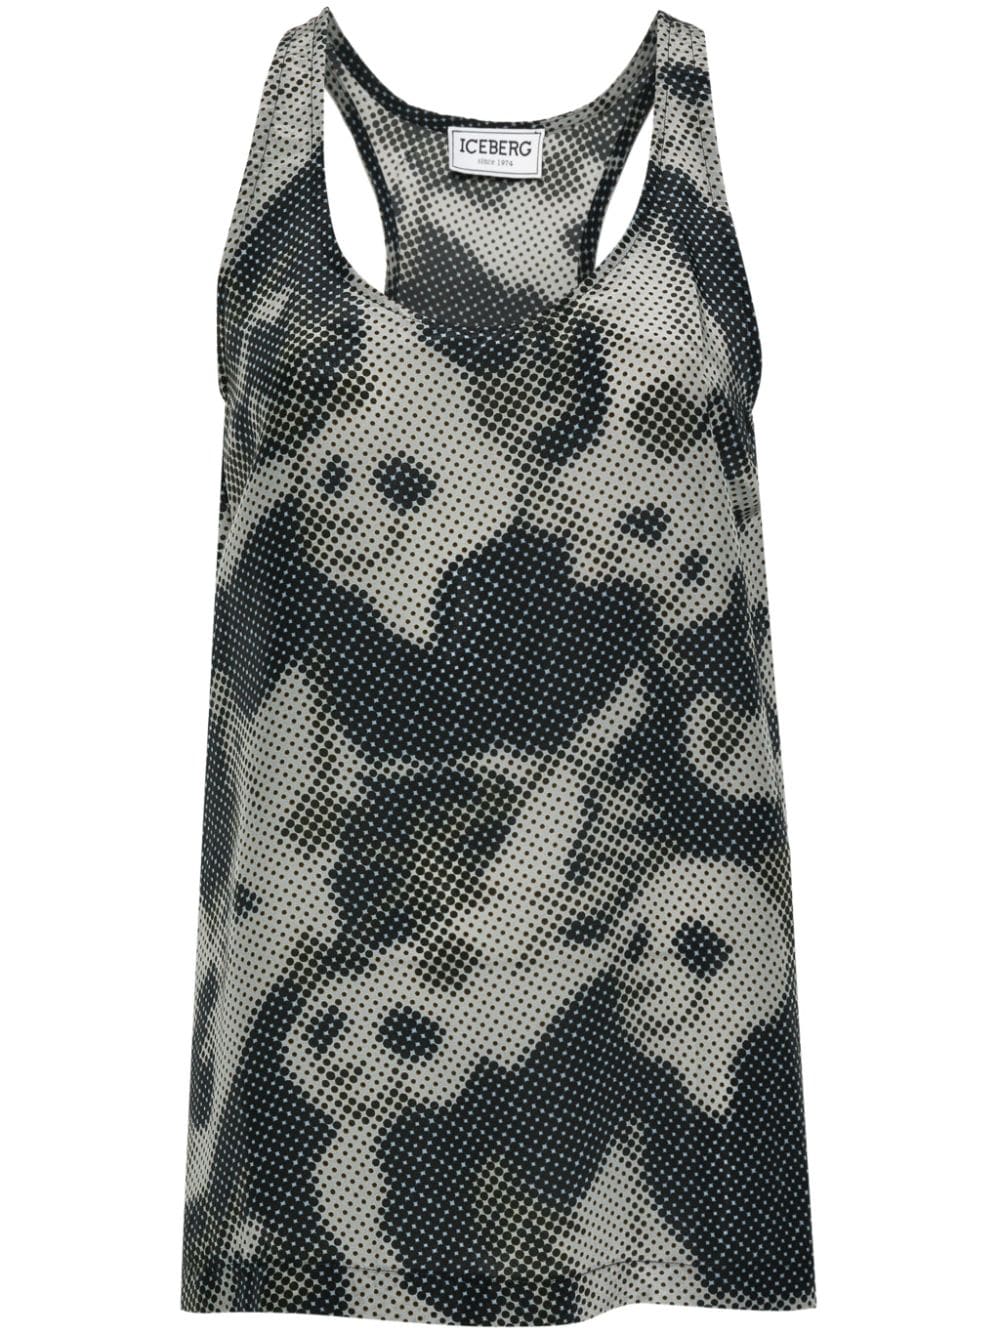 pixelated-print sleeveless tank top